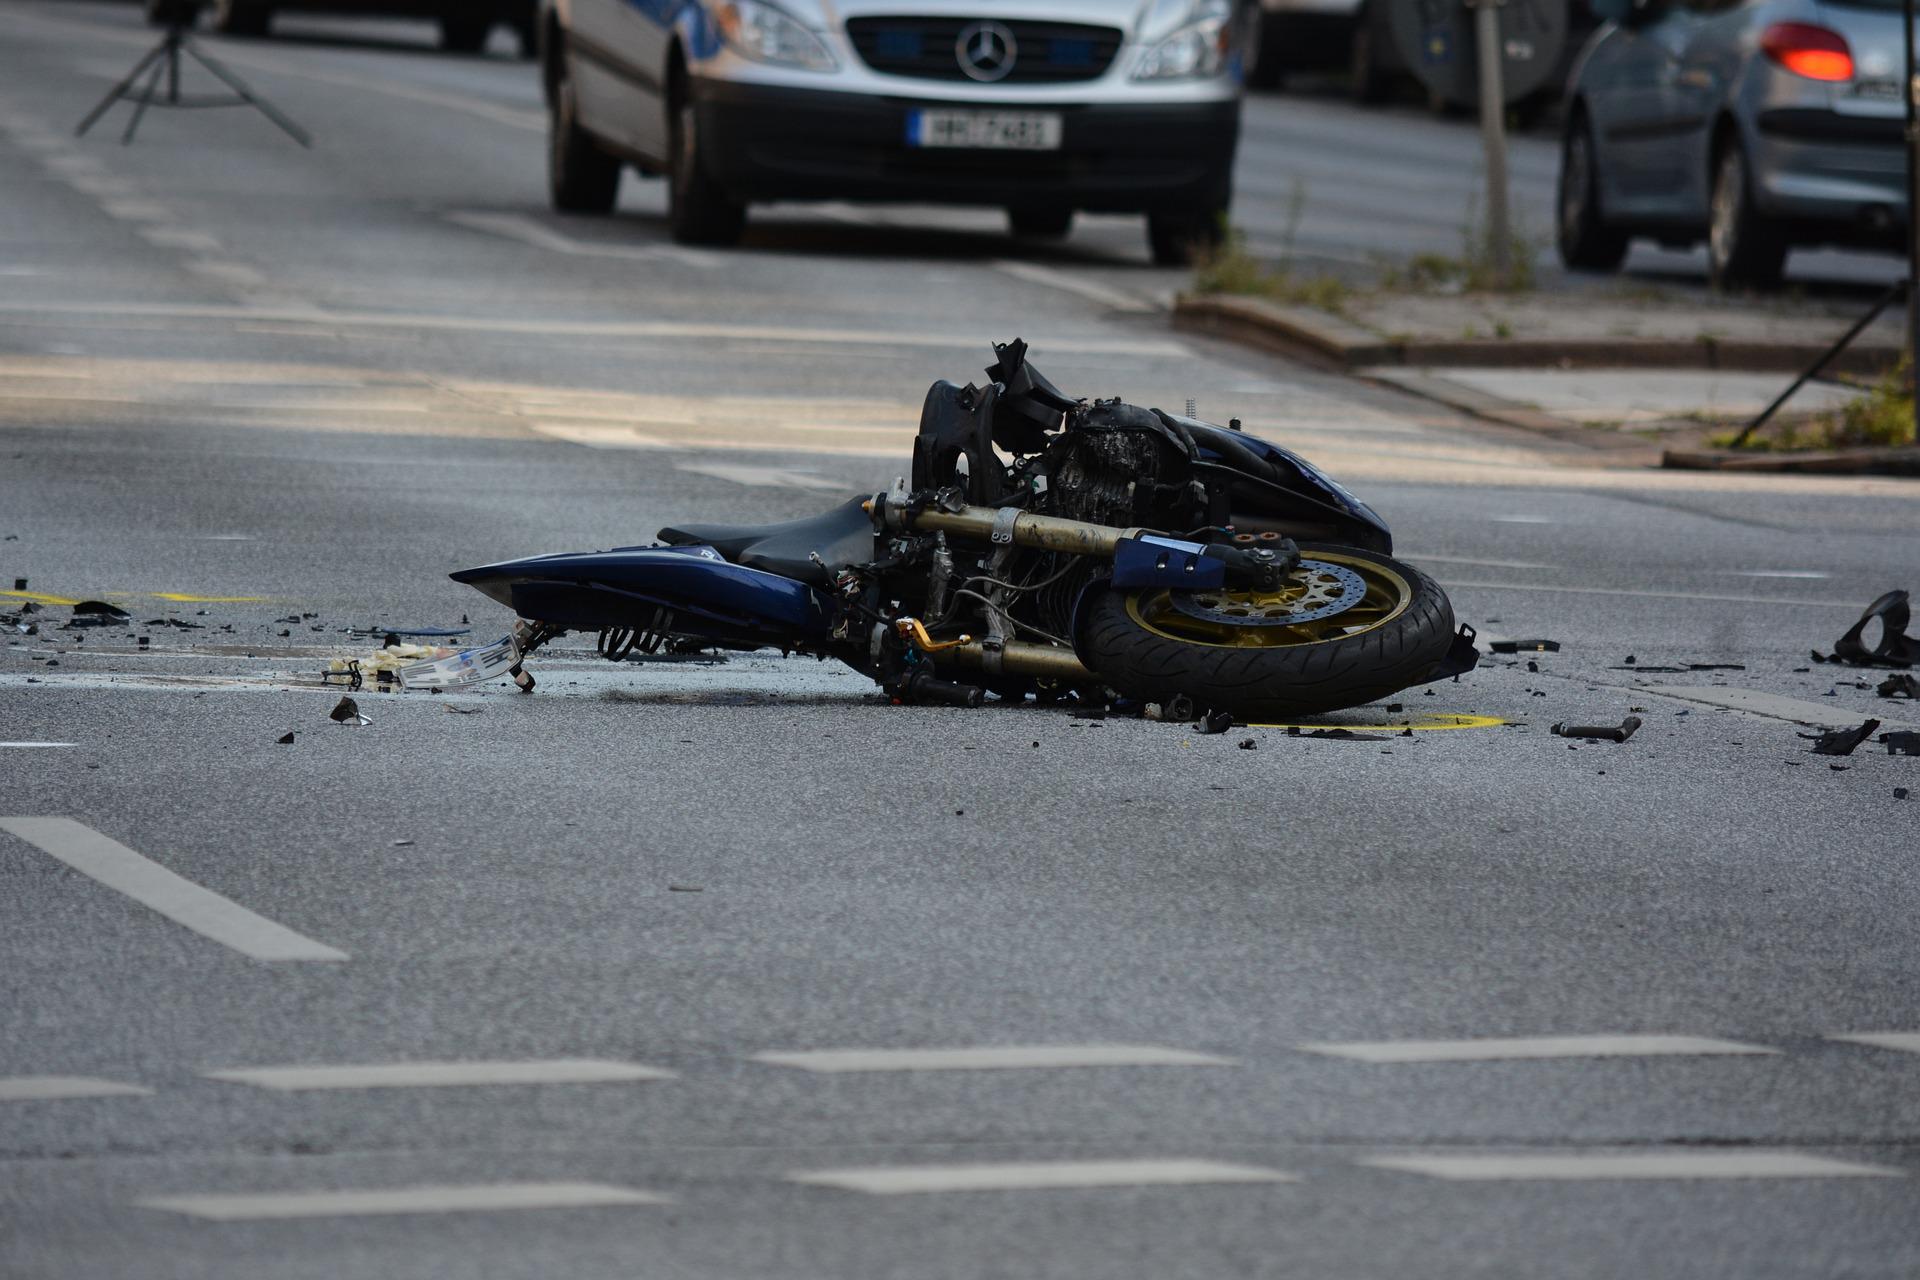 Motorcycle Crash Kills Rider in Crawford County